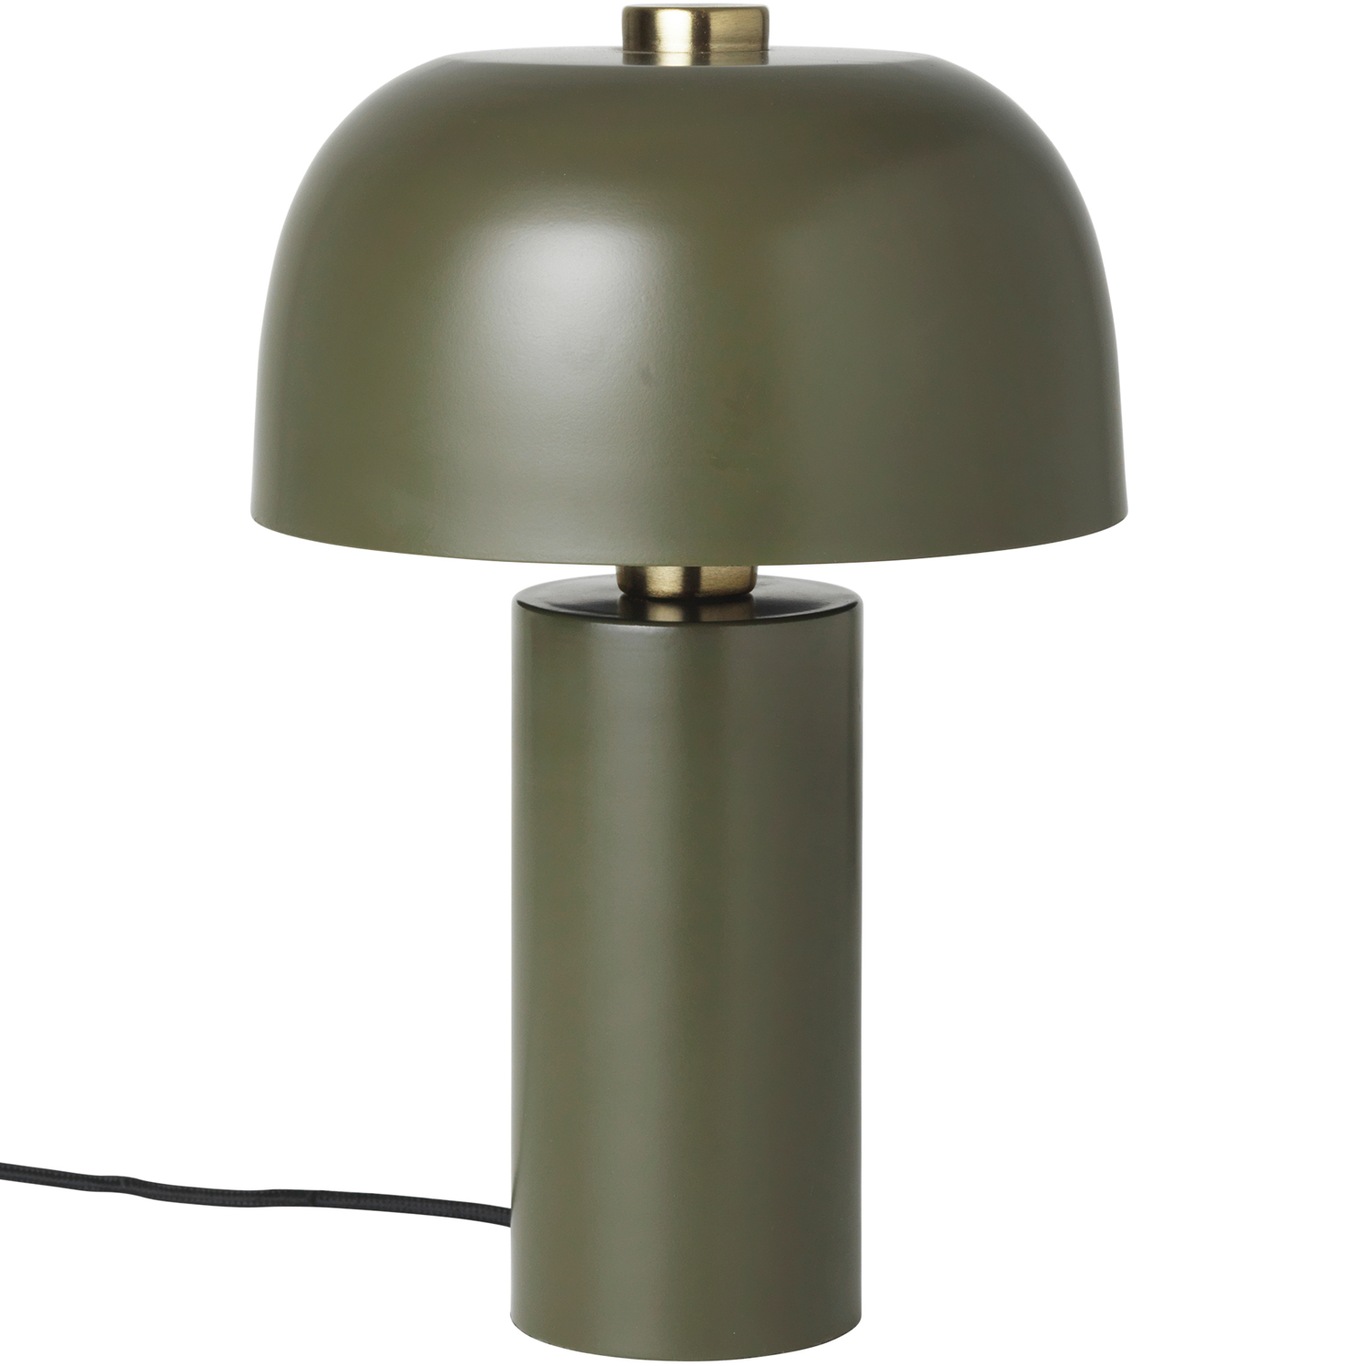 Lulu Classic Table Lamp, Army